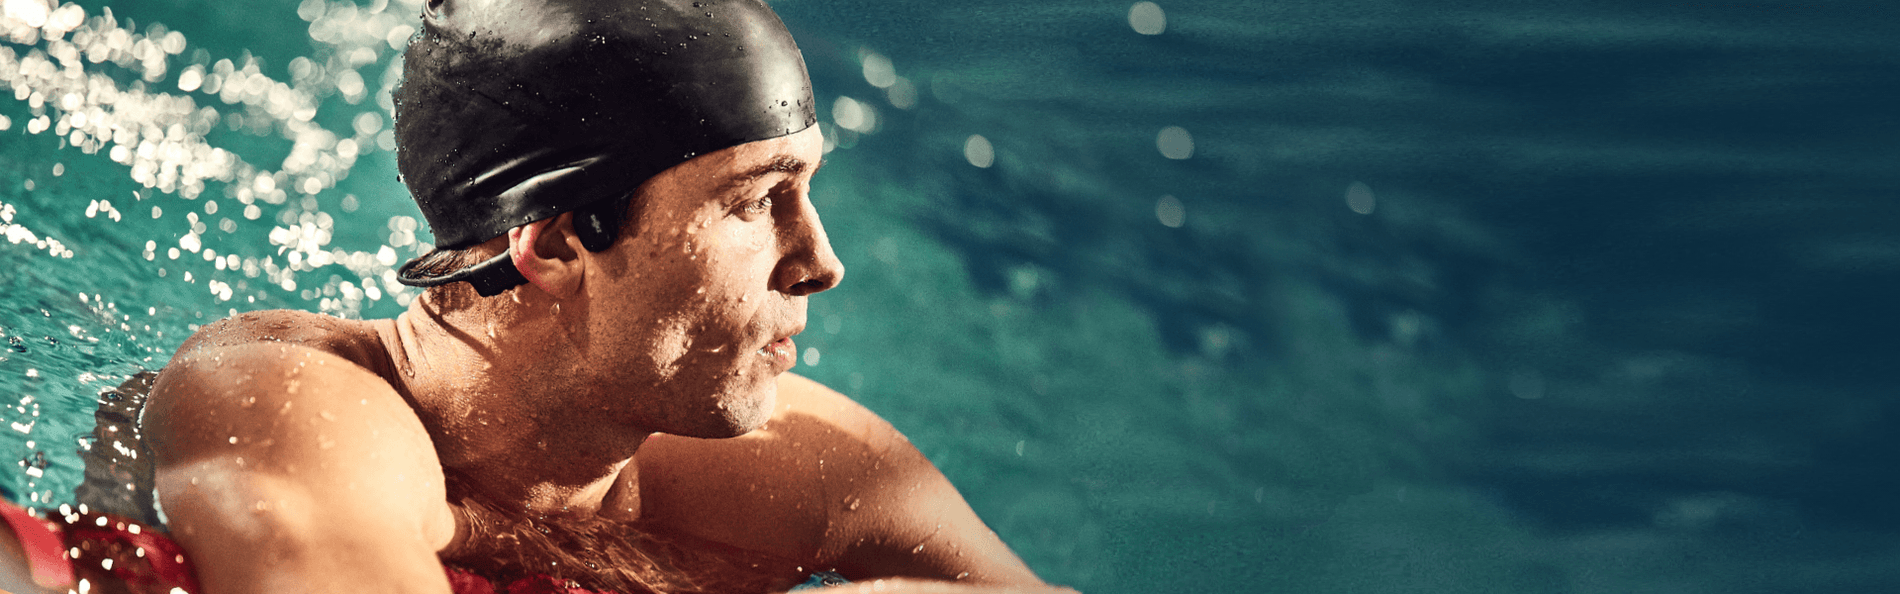 Shokz announces OpenSwim Pro bone conduction headphones for swimmers